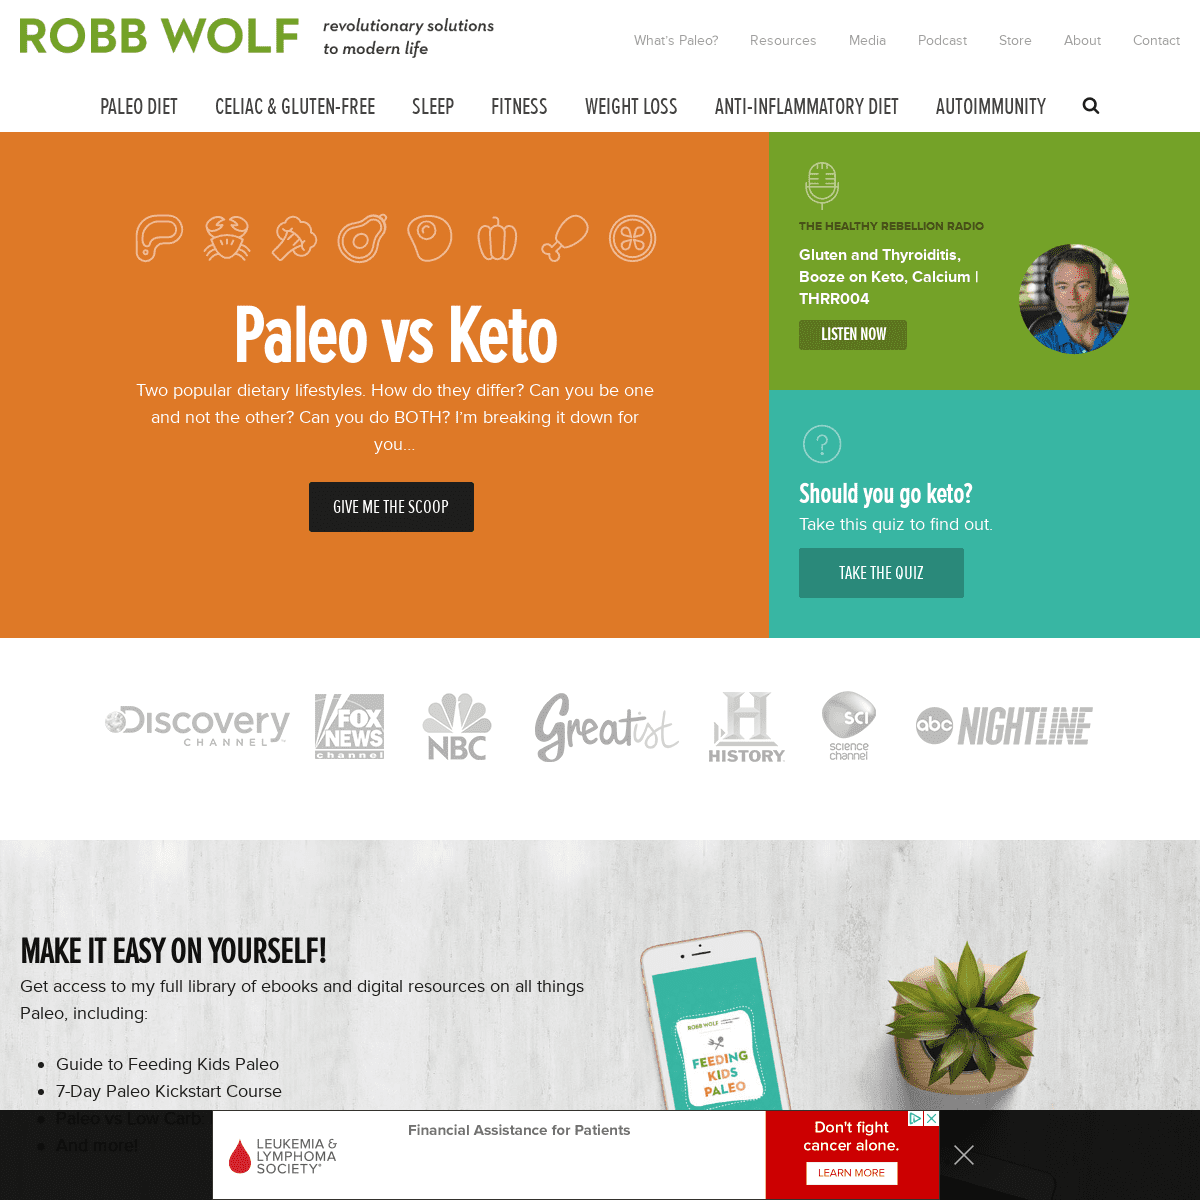 A complete backup of robbwolf.com